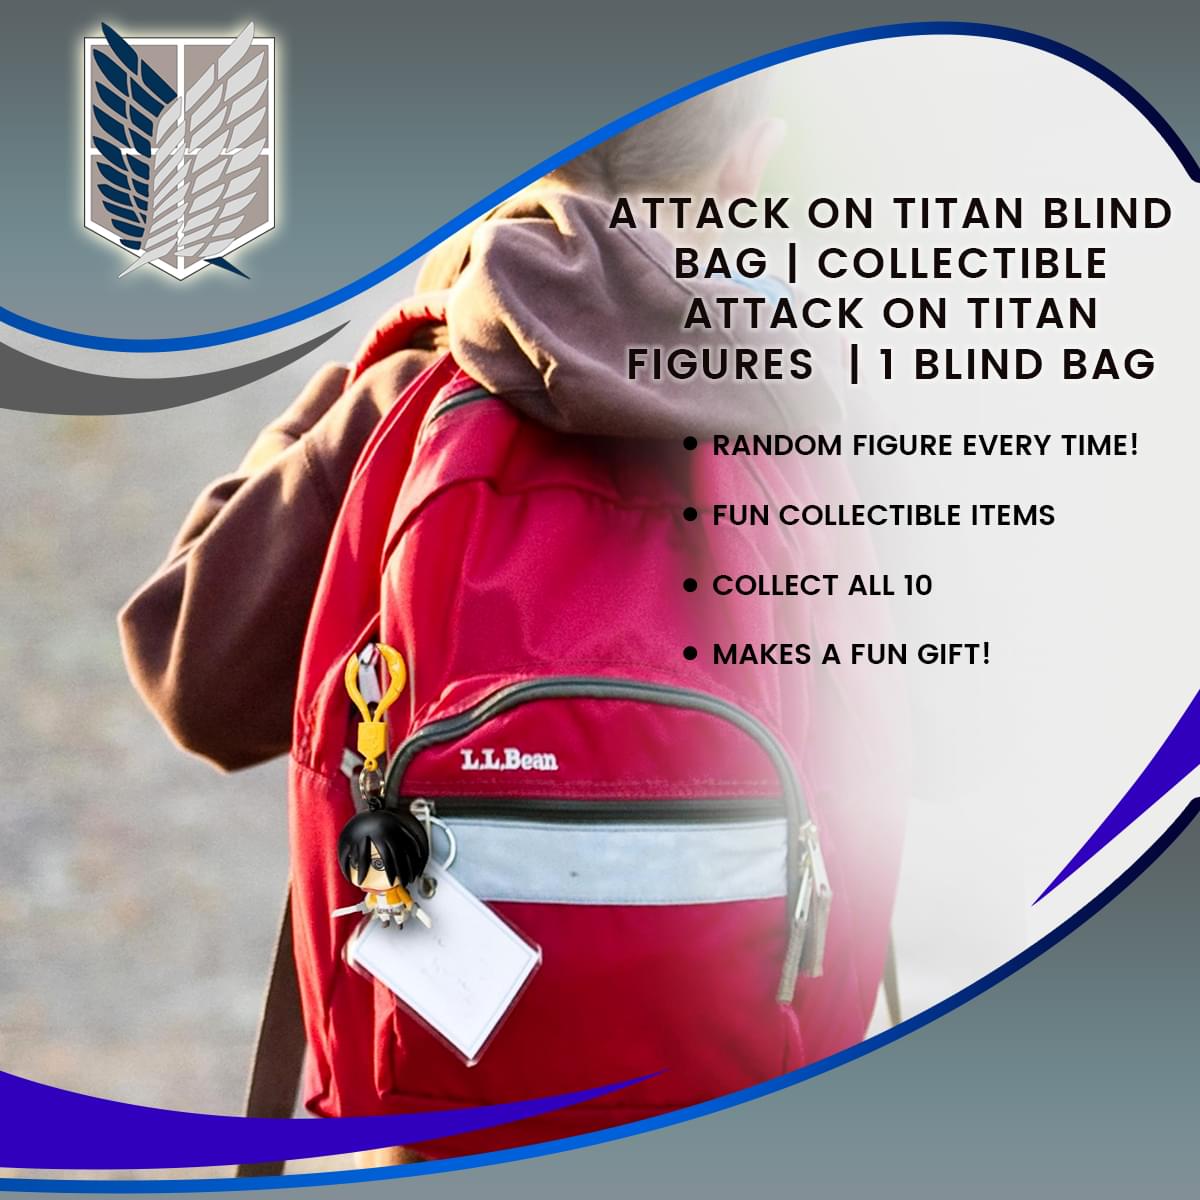 Attack On Titan Blind Bag | Collectible Attack On Titan Figures  | 1 Blind Bag